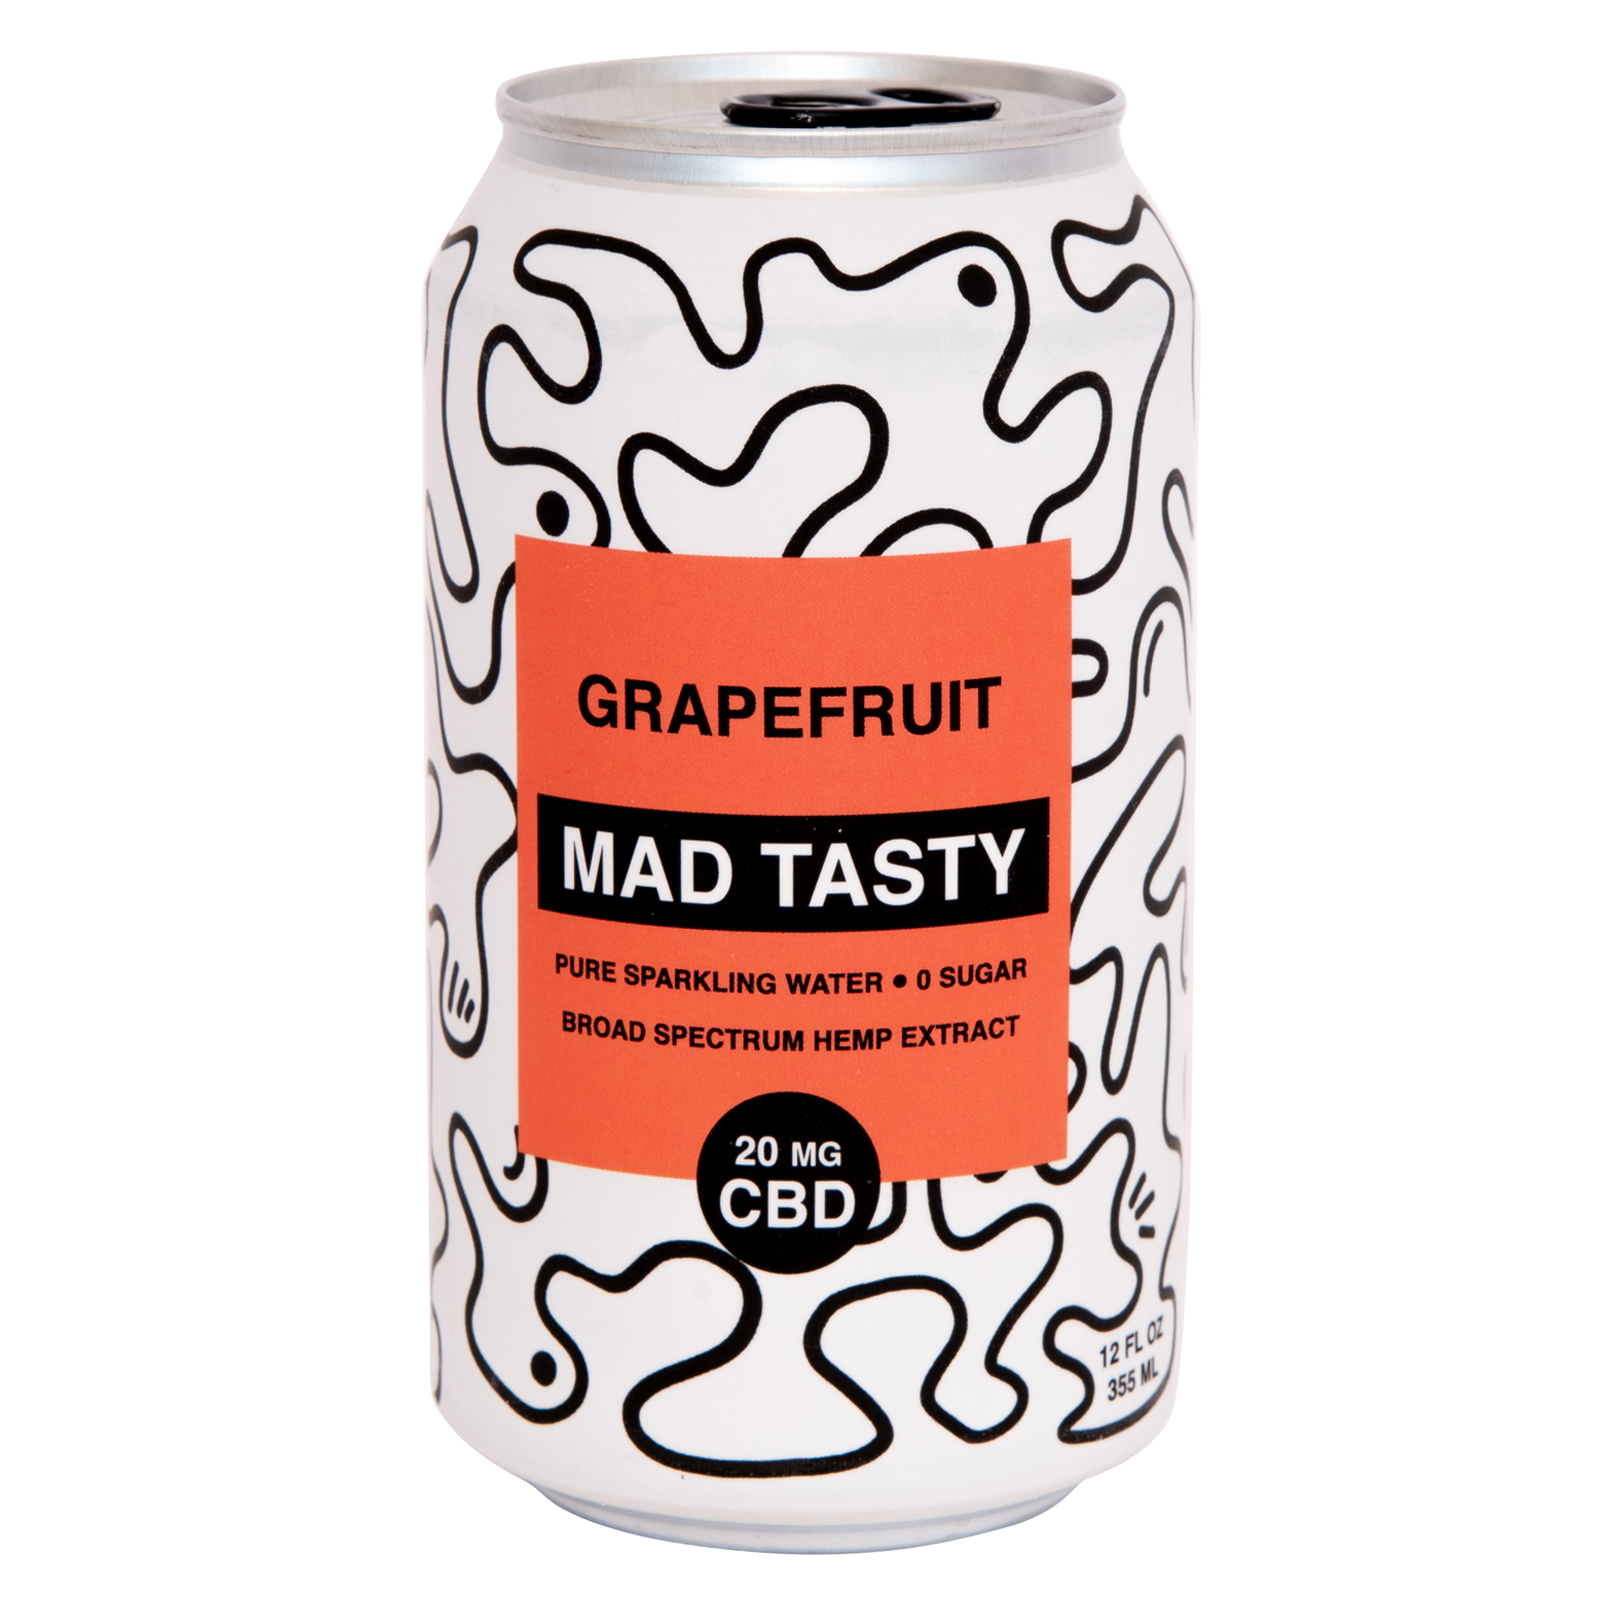 Mad Tasty Grapefruit CBD Sparkling Water 12oz Can 20mg